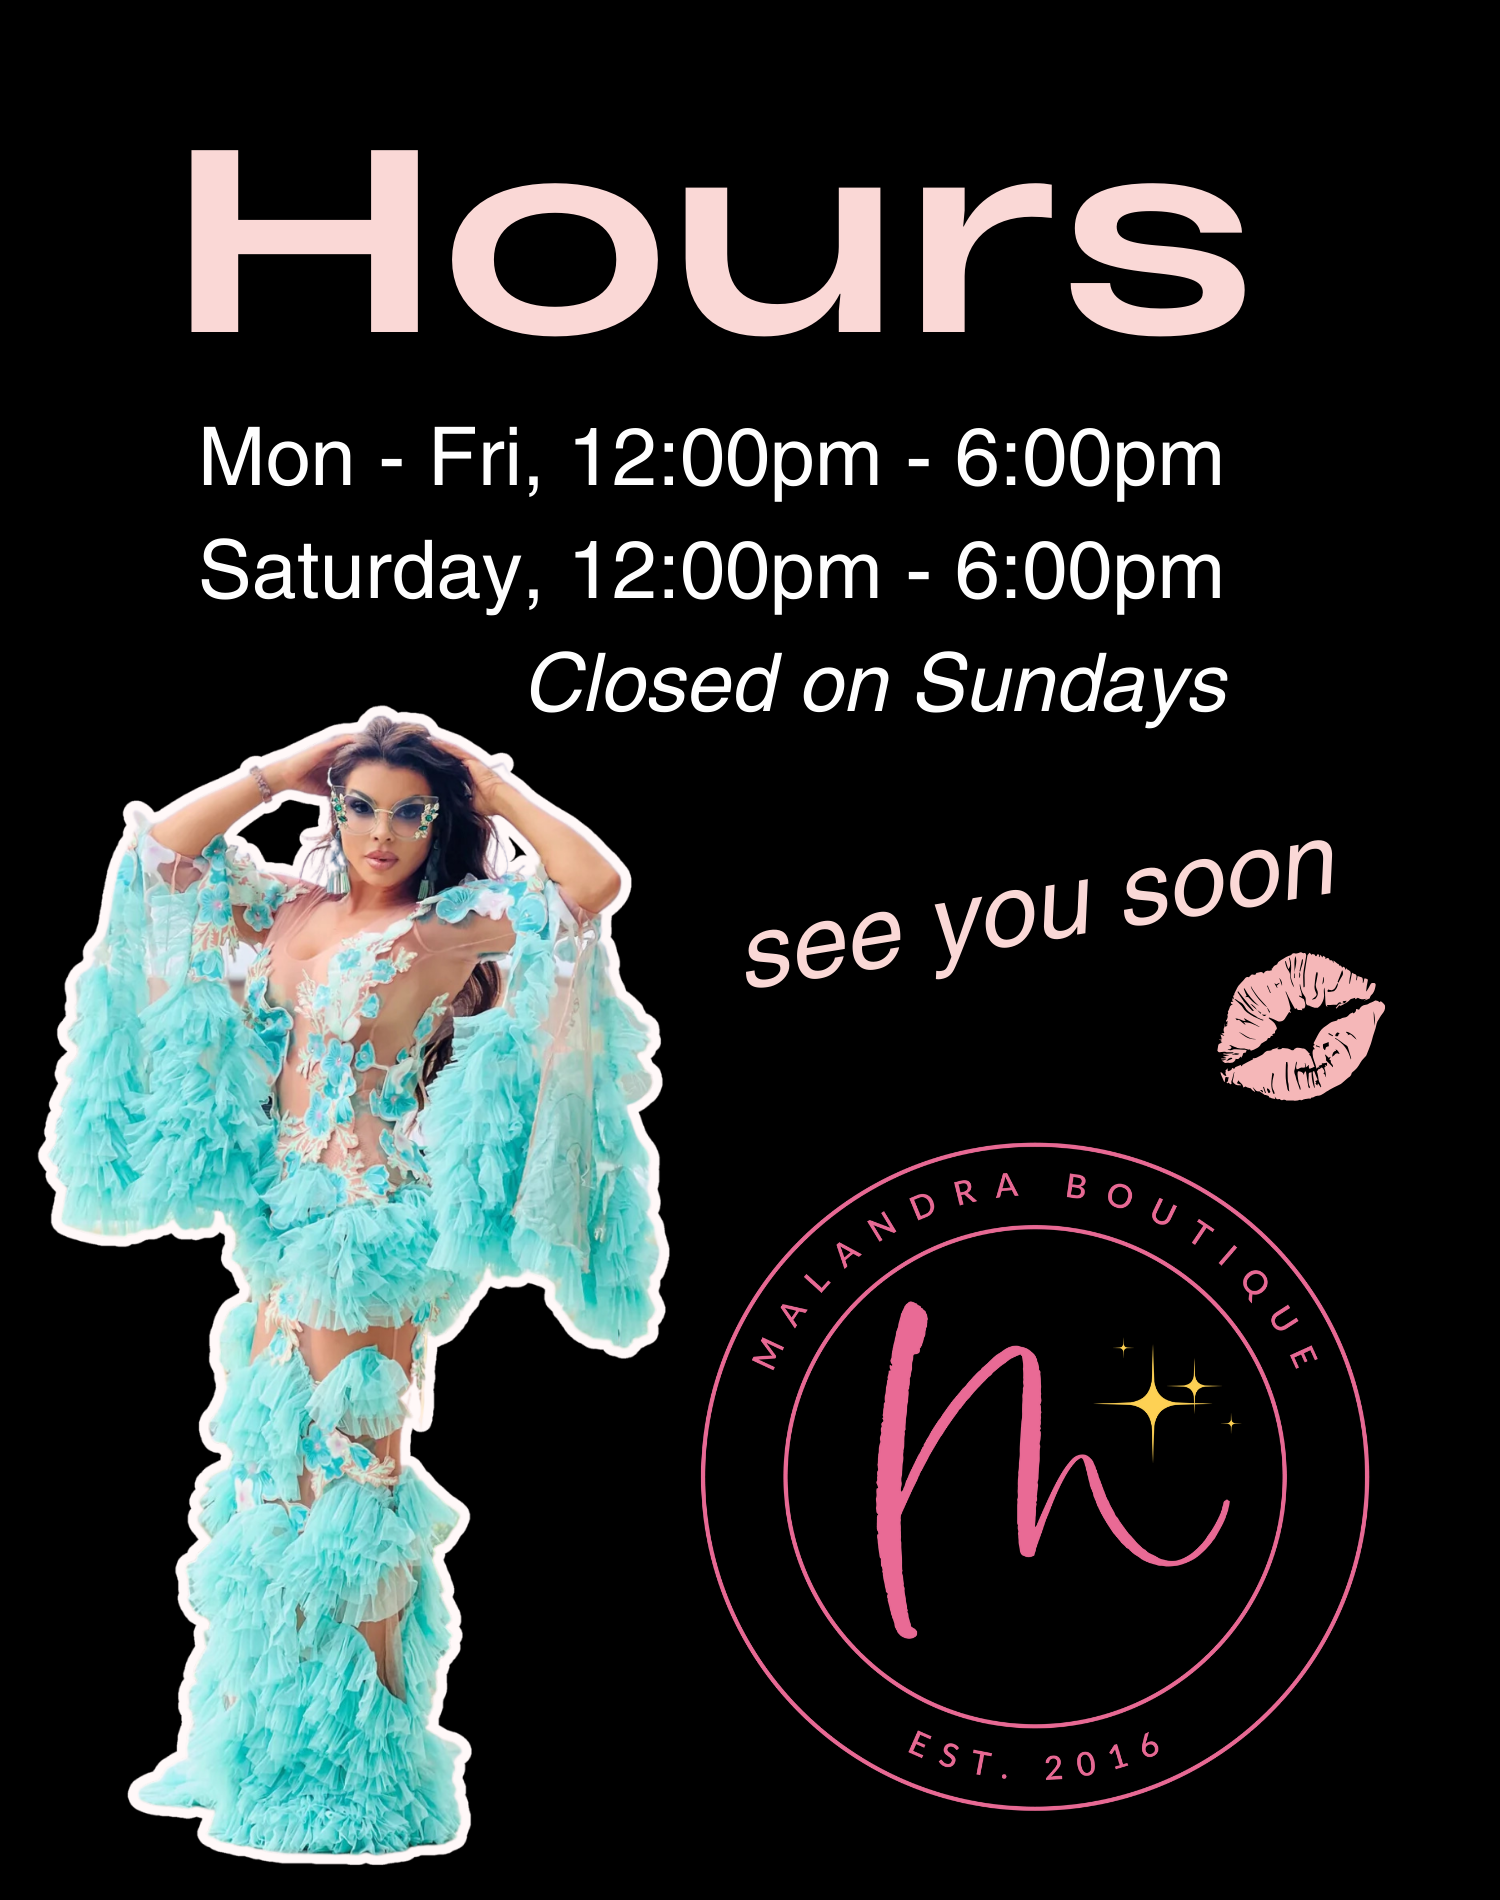 Shop at Malandra Boutique Mon-Fri 12pm-6pm and Sat. 12pm-6pm, Closed on Sundays | Women's Fashion Boutique Located in Las Vegas, NV